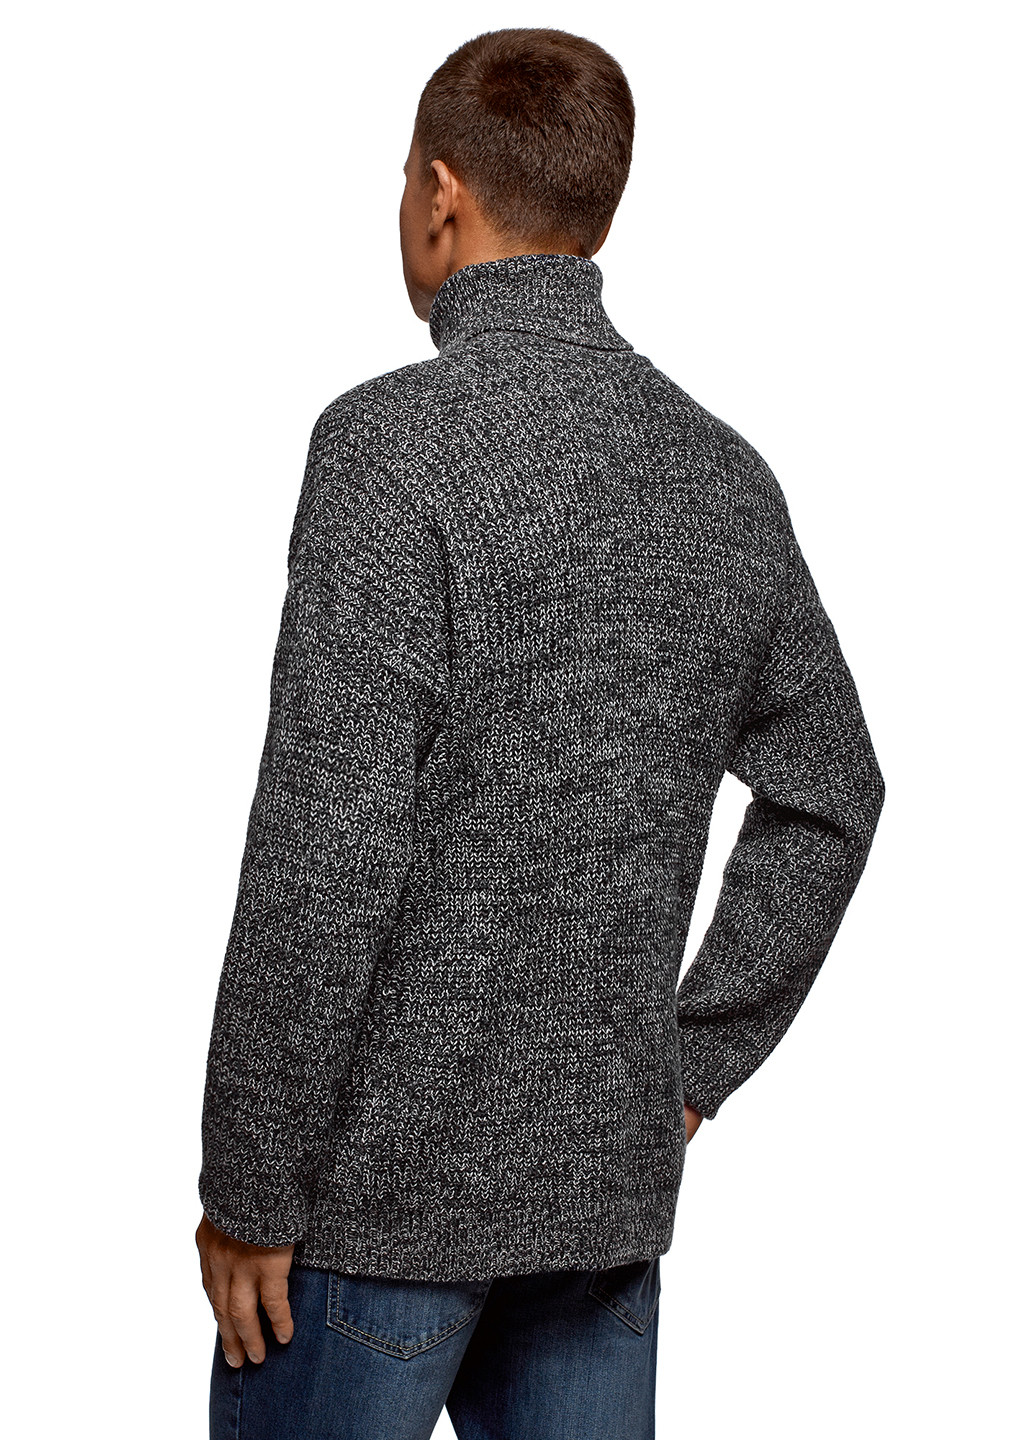 Грифельно-серый демисезонный свитер хомут Oodji